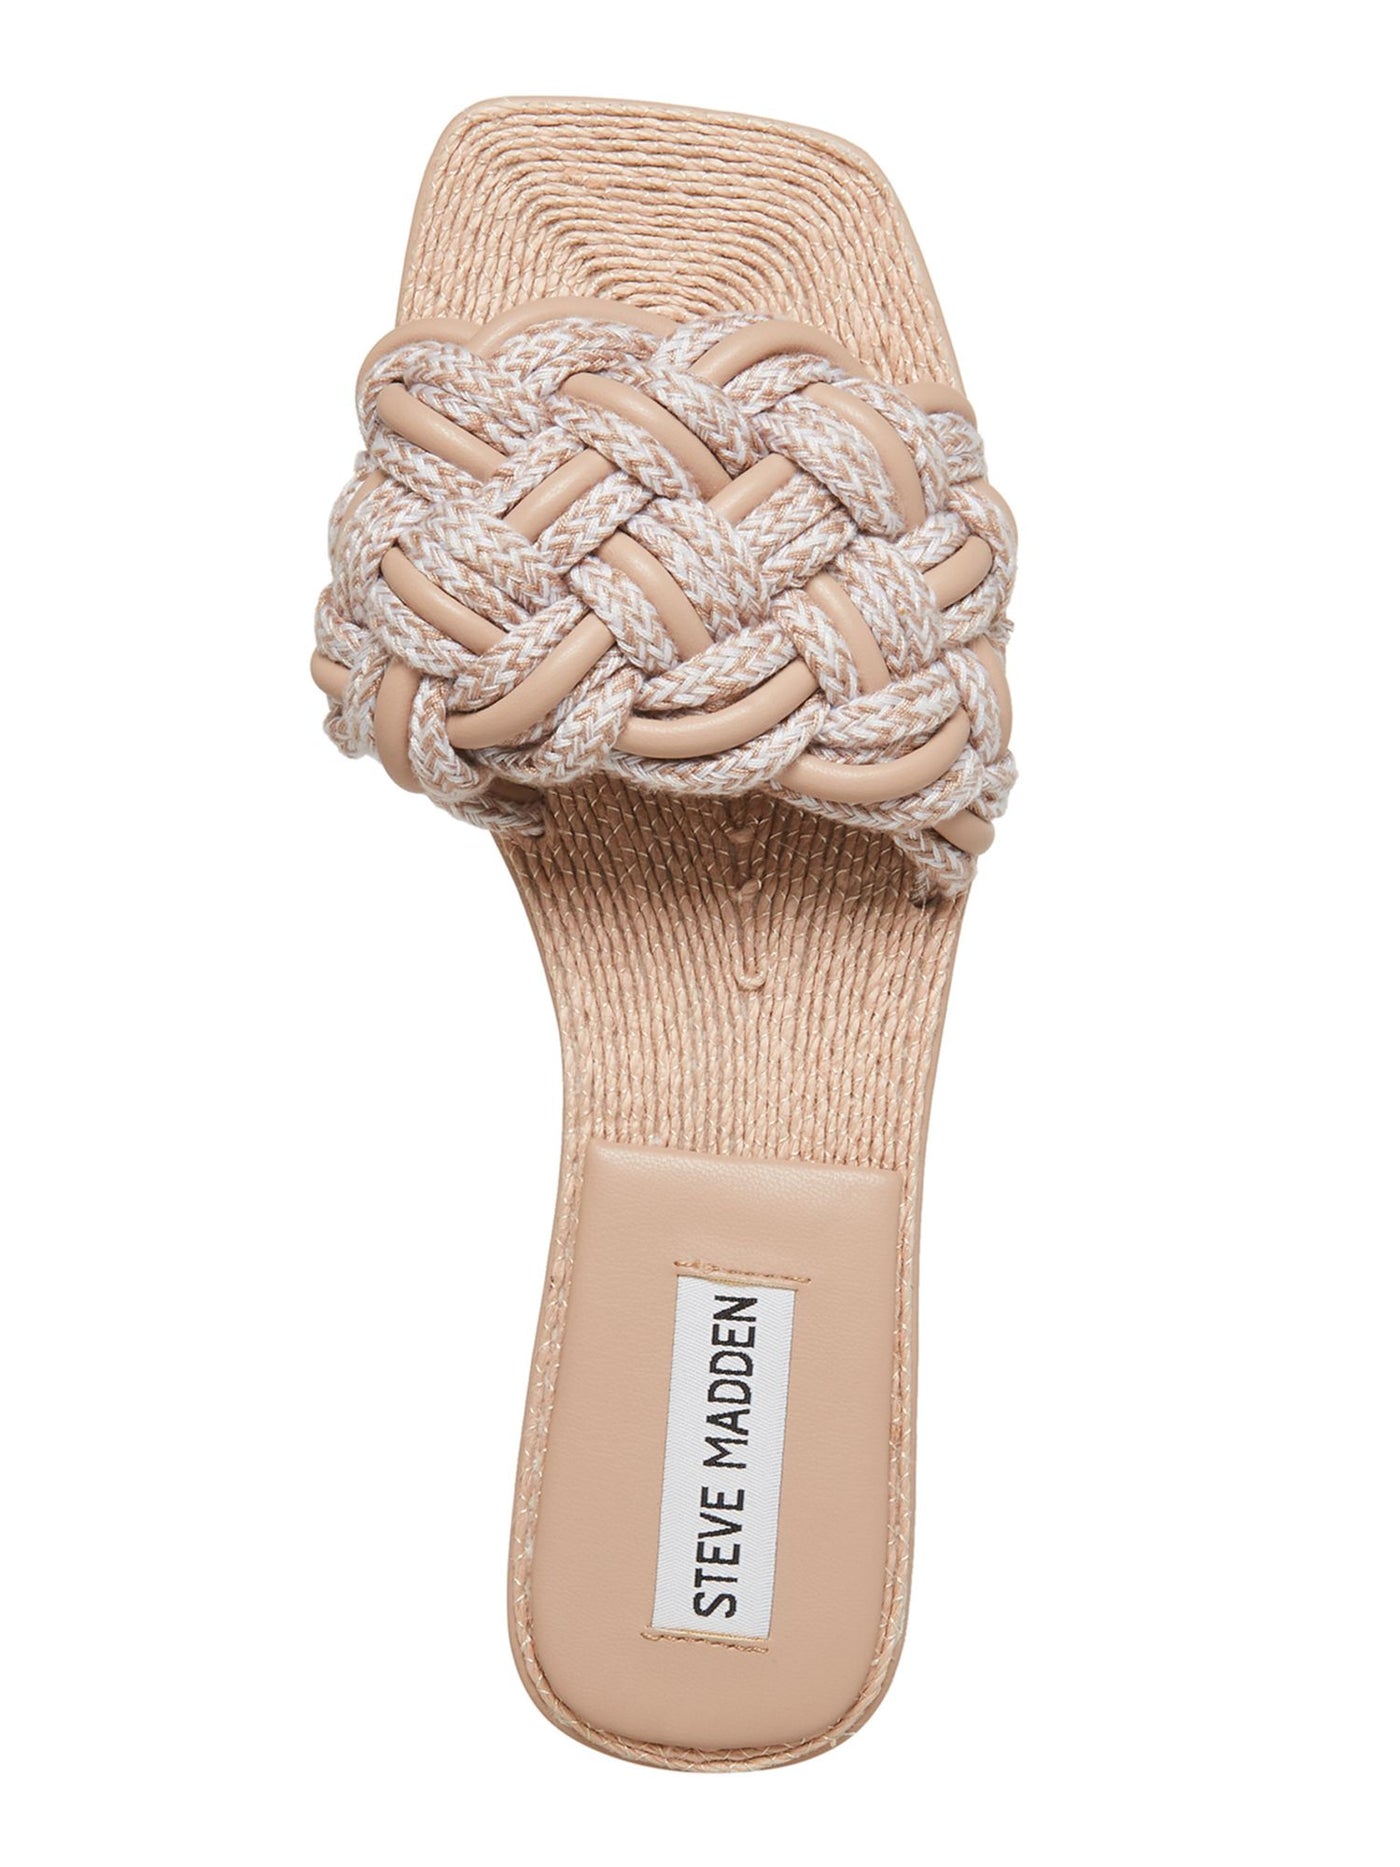 STEVE MADDEN Womens Beige Patterned Padded Woven Zeal Square Toe Block Heel Slip On Slide Sandals Shoes 7.5 M